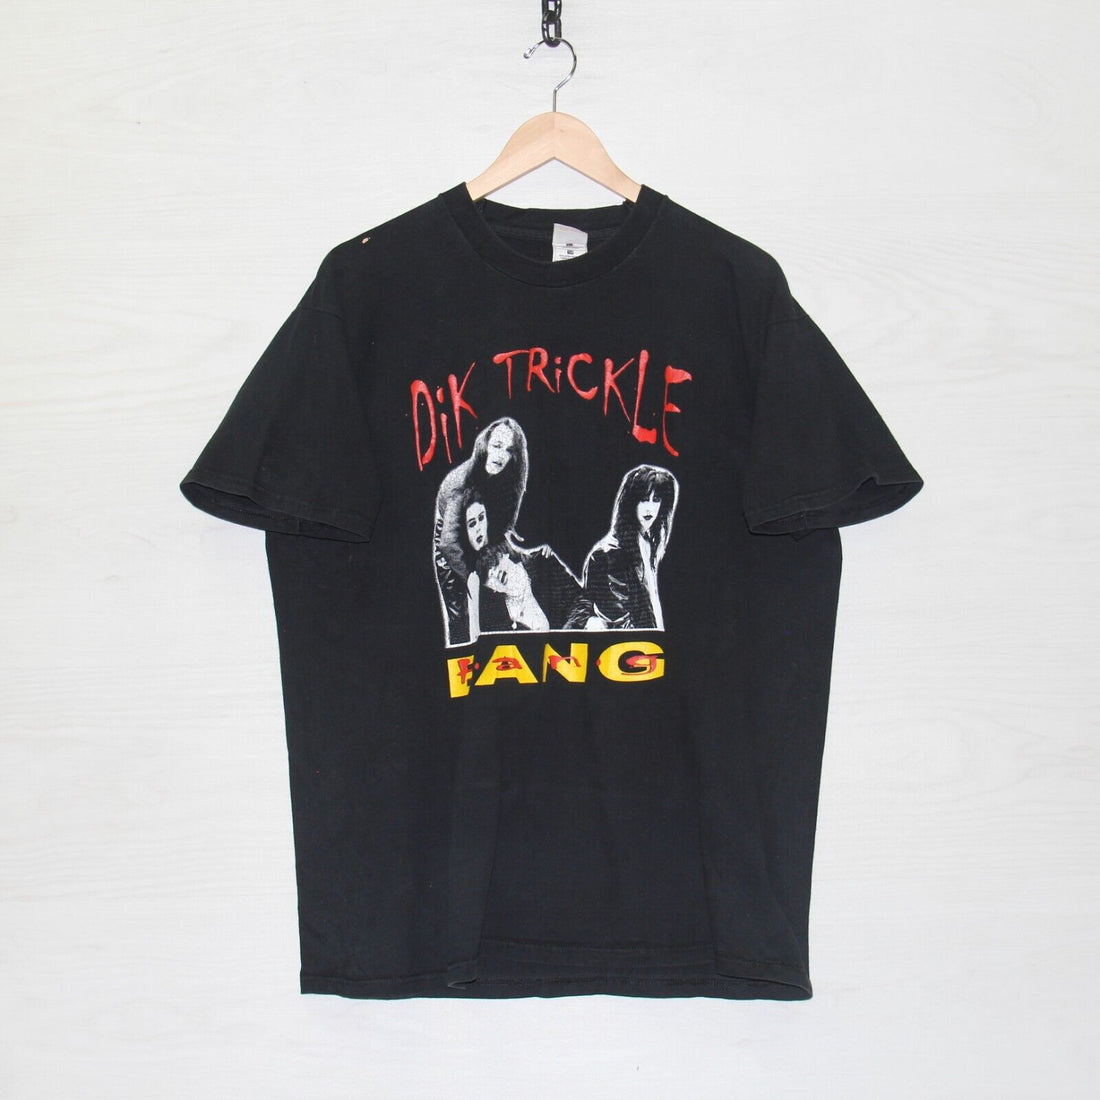 Vintage Dik Trickle Bang bang Size XL Black Band Tee 90s